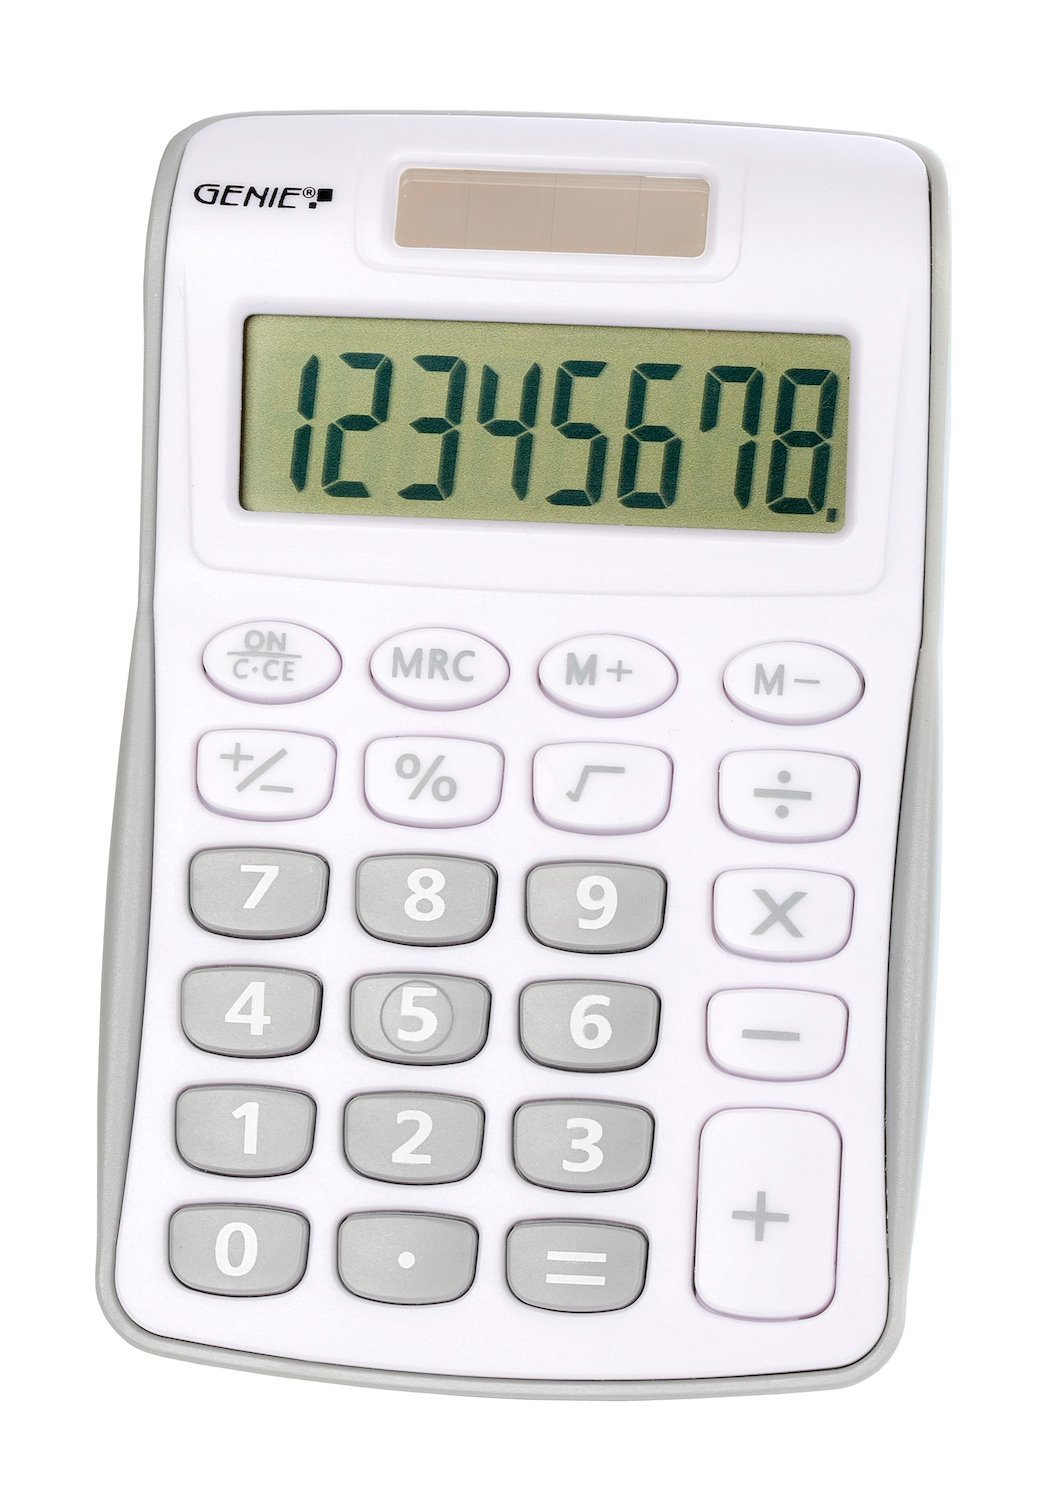 Genius Genie 120 S Calculator Pocket Display Grey White (Genie 120B 8 Digit Pocket Calculator Silver - 12494)